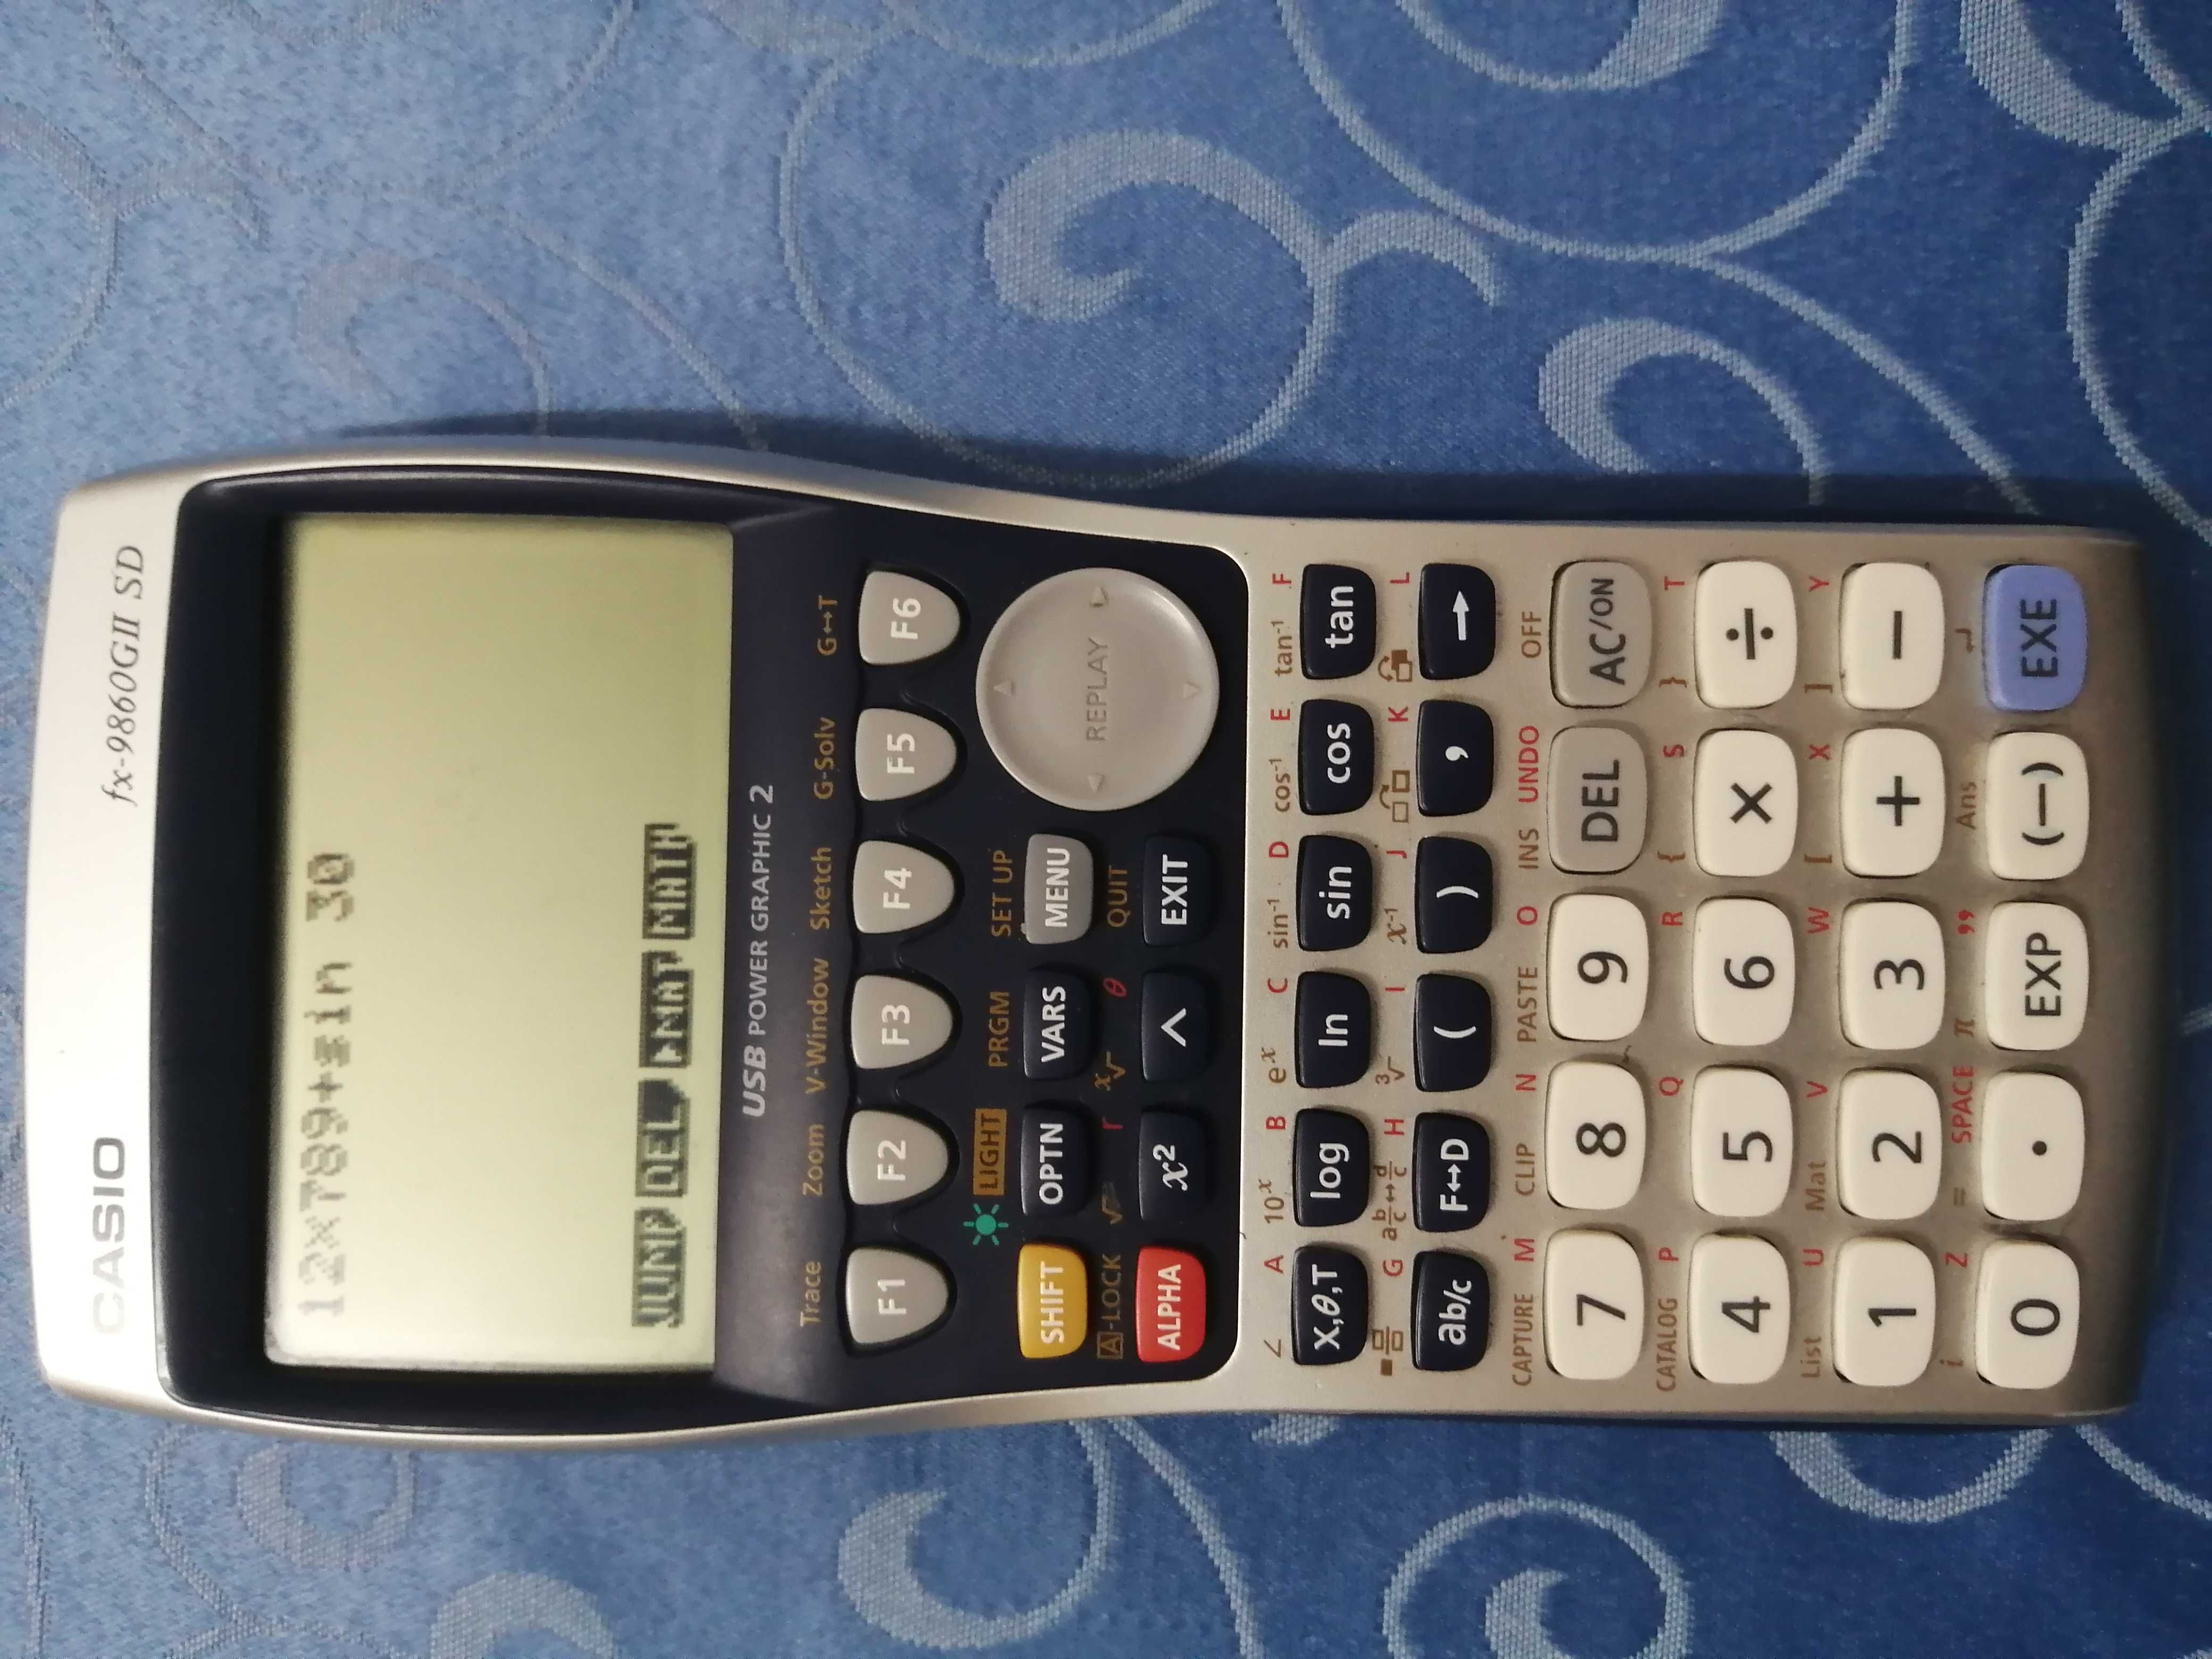 Calculadora gráfica  Casio fx 9860 GII SD